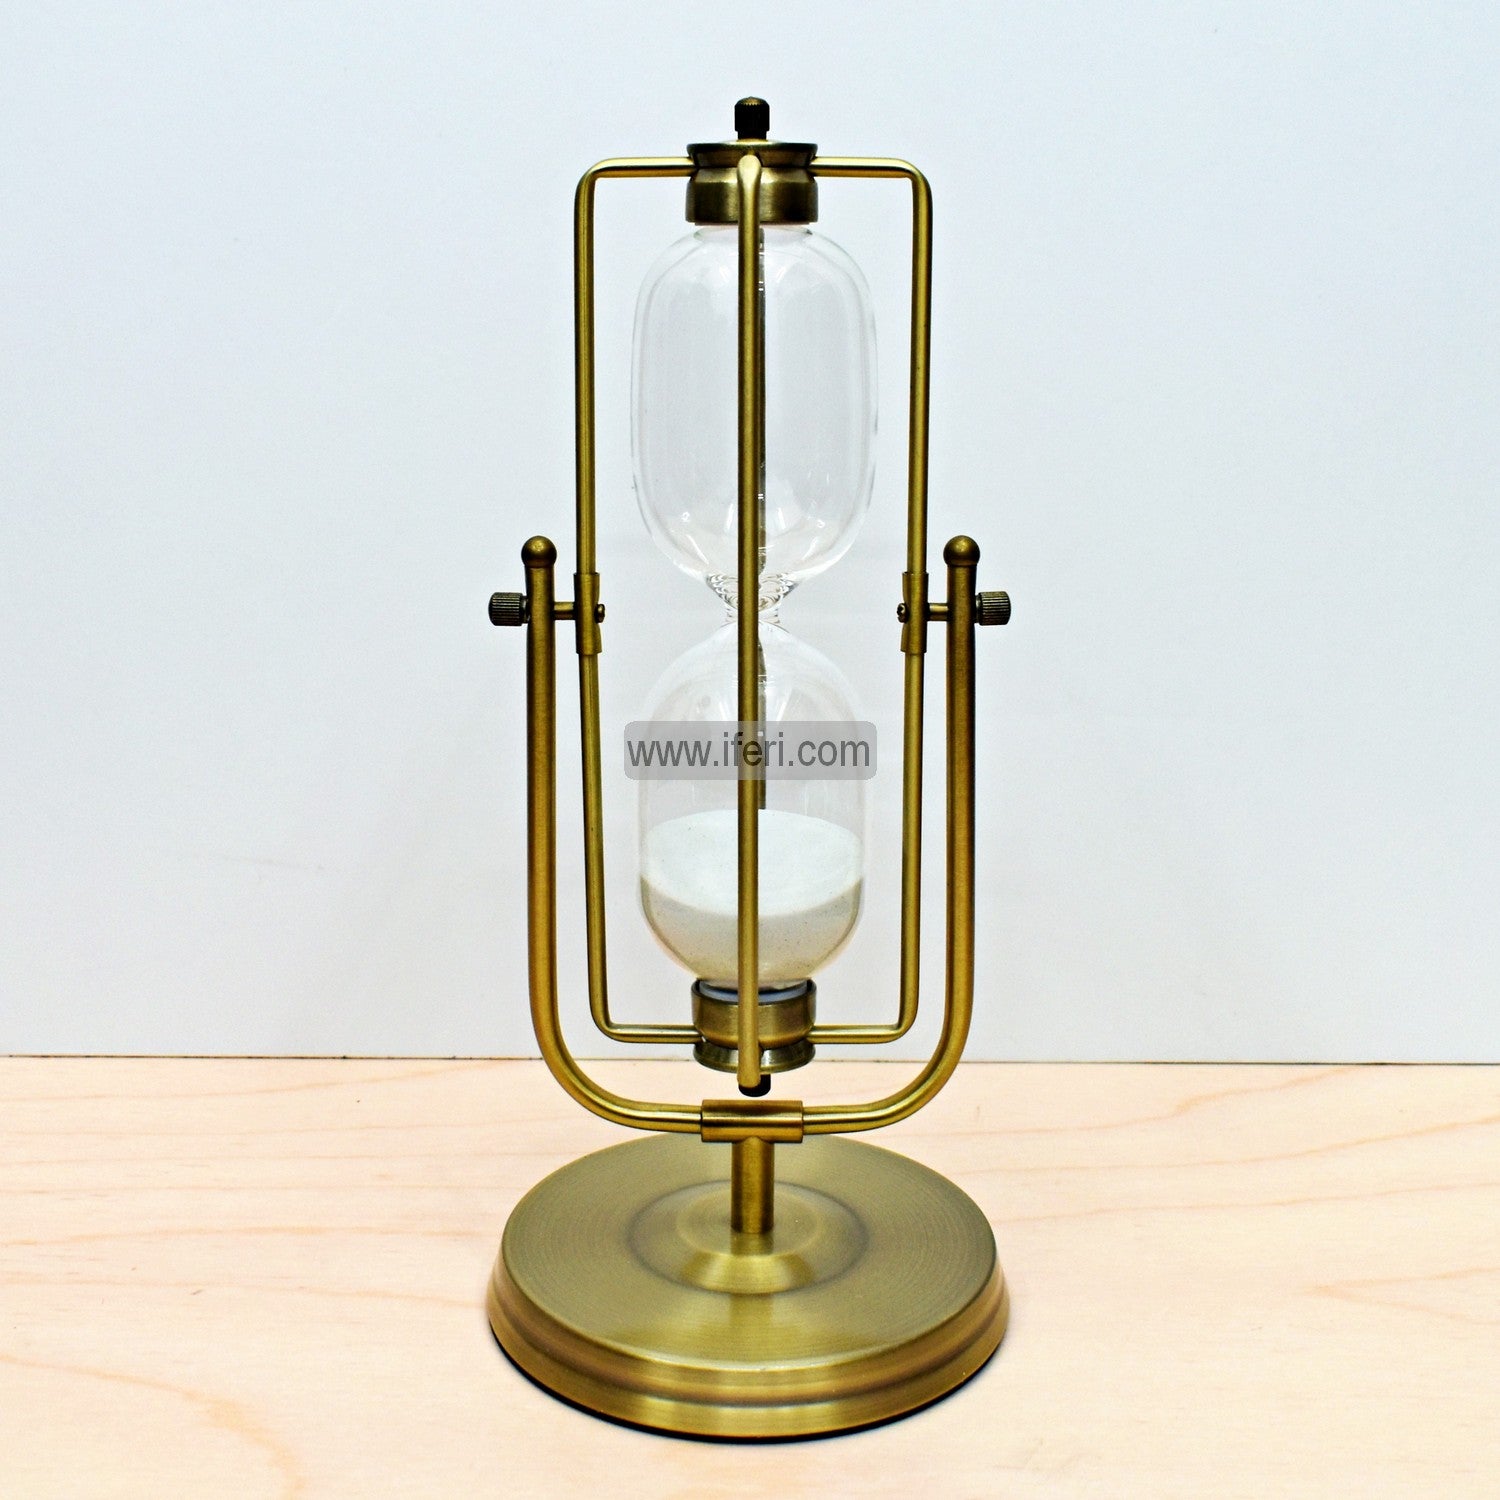 Buy Decorative Rotating Hourglass, Sand Timer, Sandglass, Time Turner Online Through iferi.com from Bangladesh